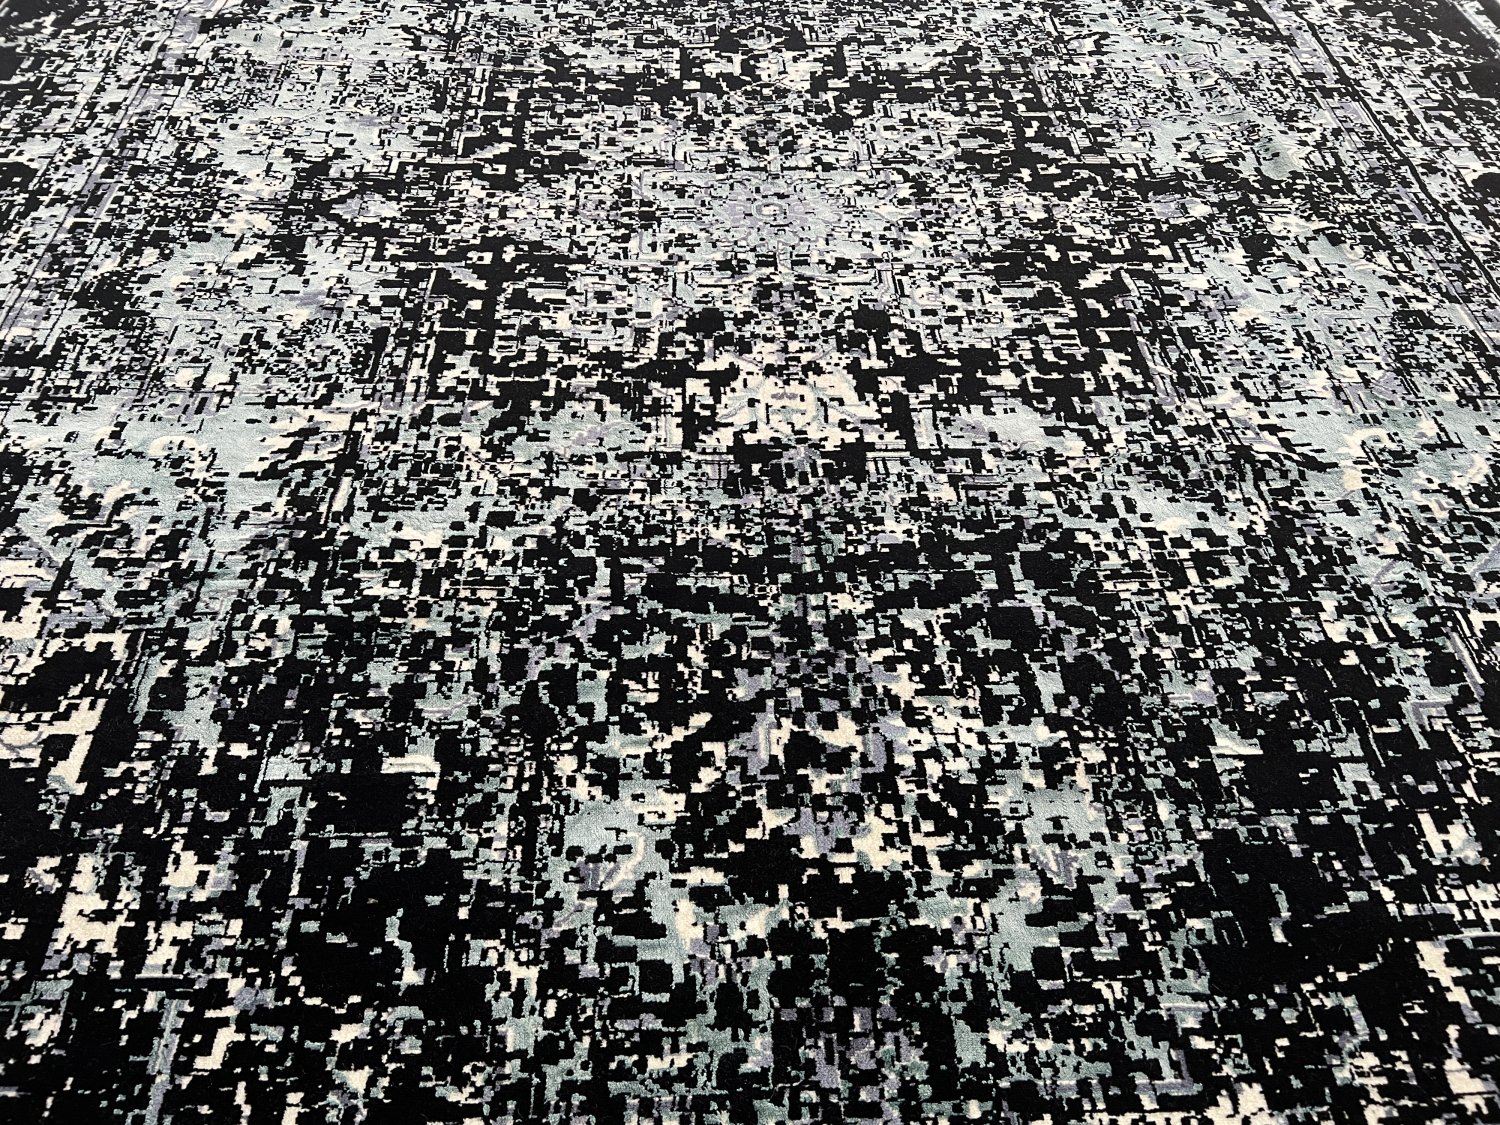 فرش پشمی ماشینی طبیعی و ارگانیک کد 0020 - زمینه مشکی - حاشیه مشکی